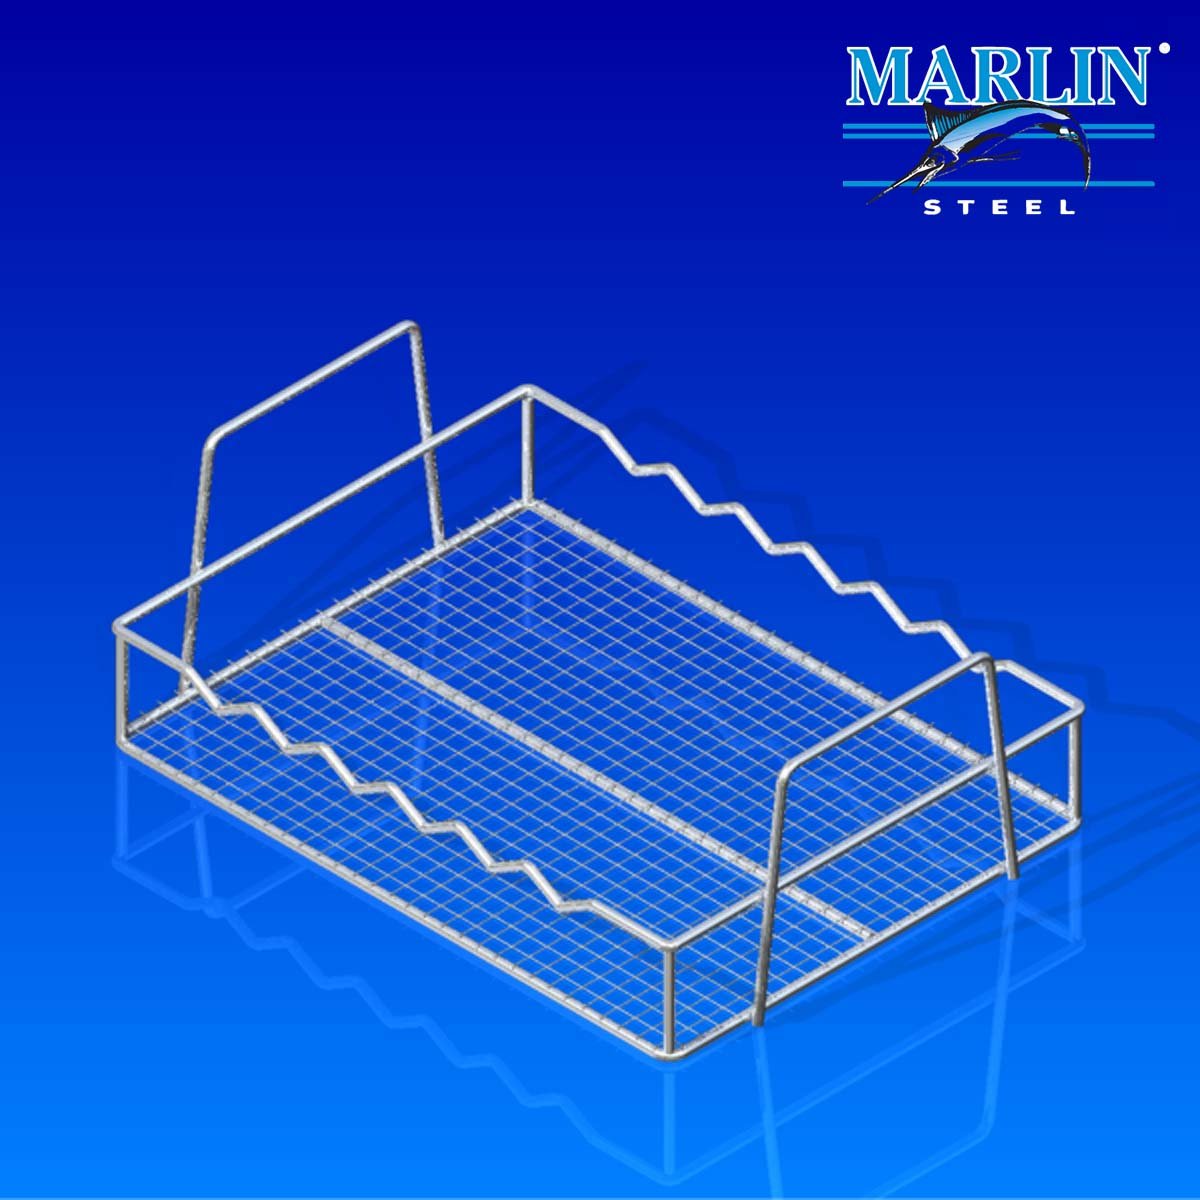 Marlin Steel Basket with Handles 854001